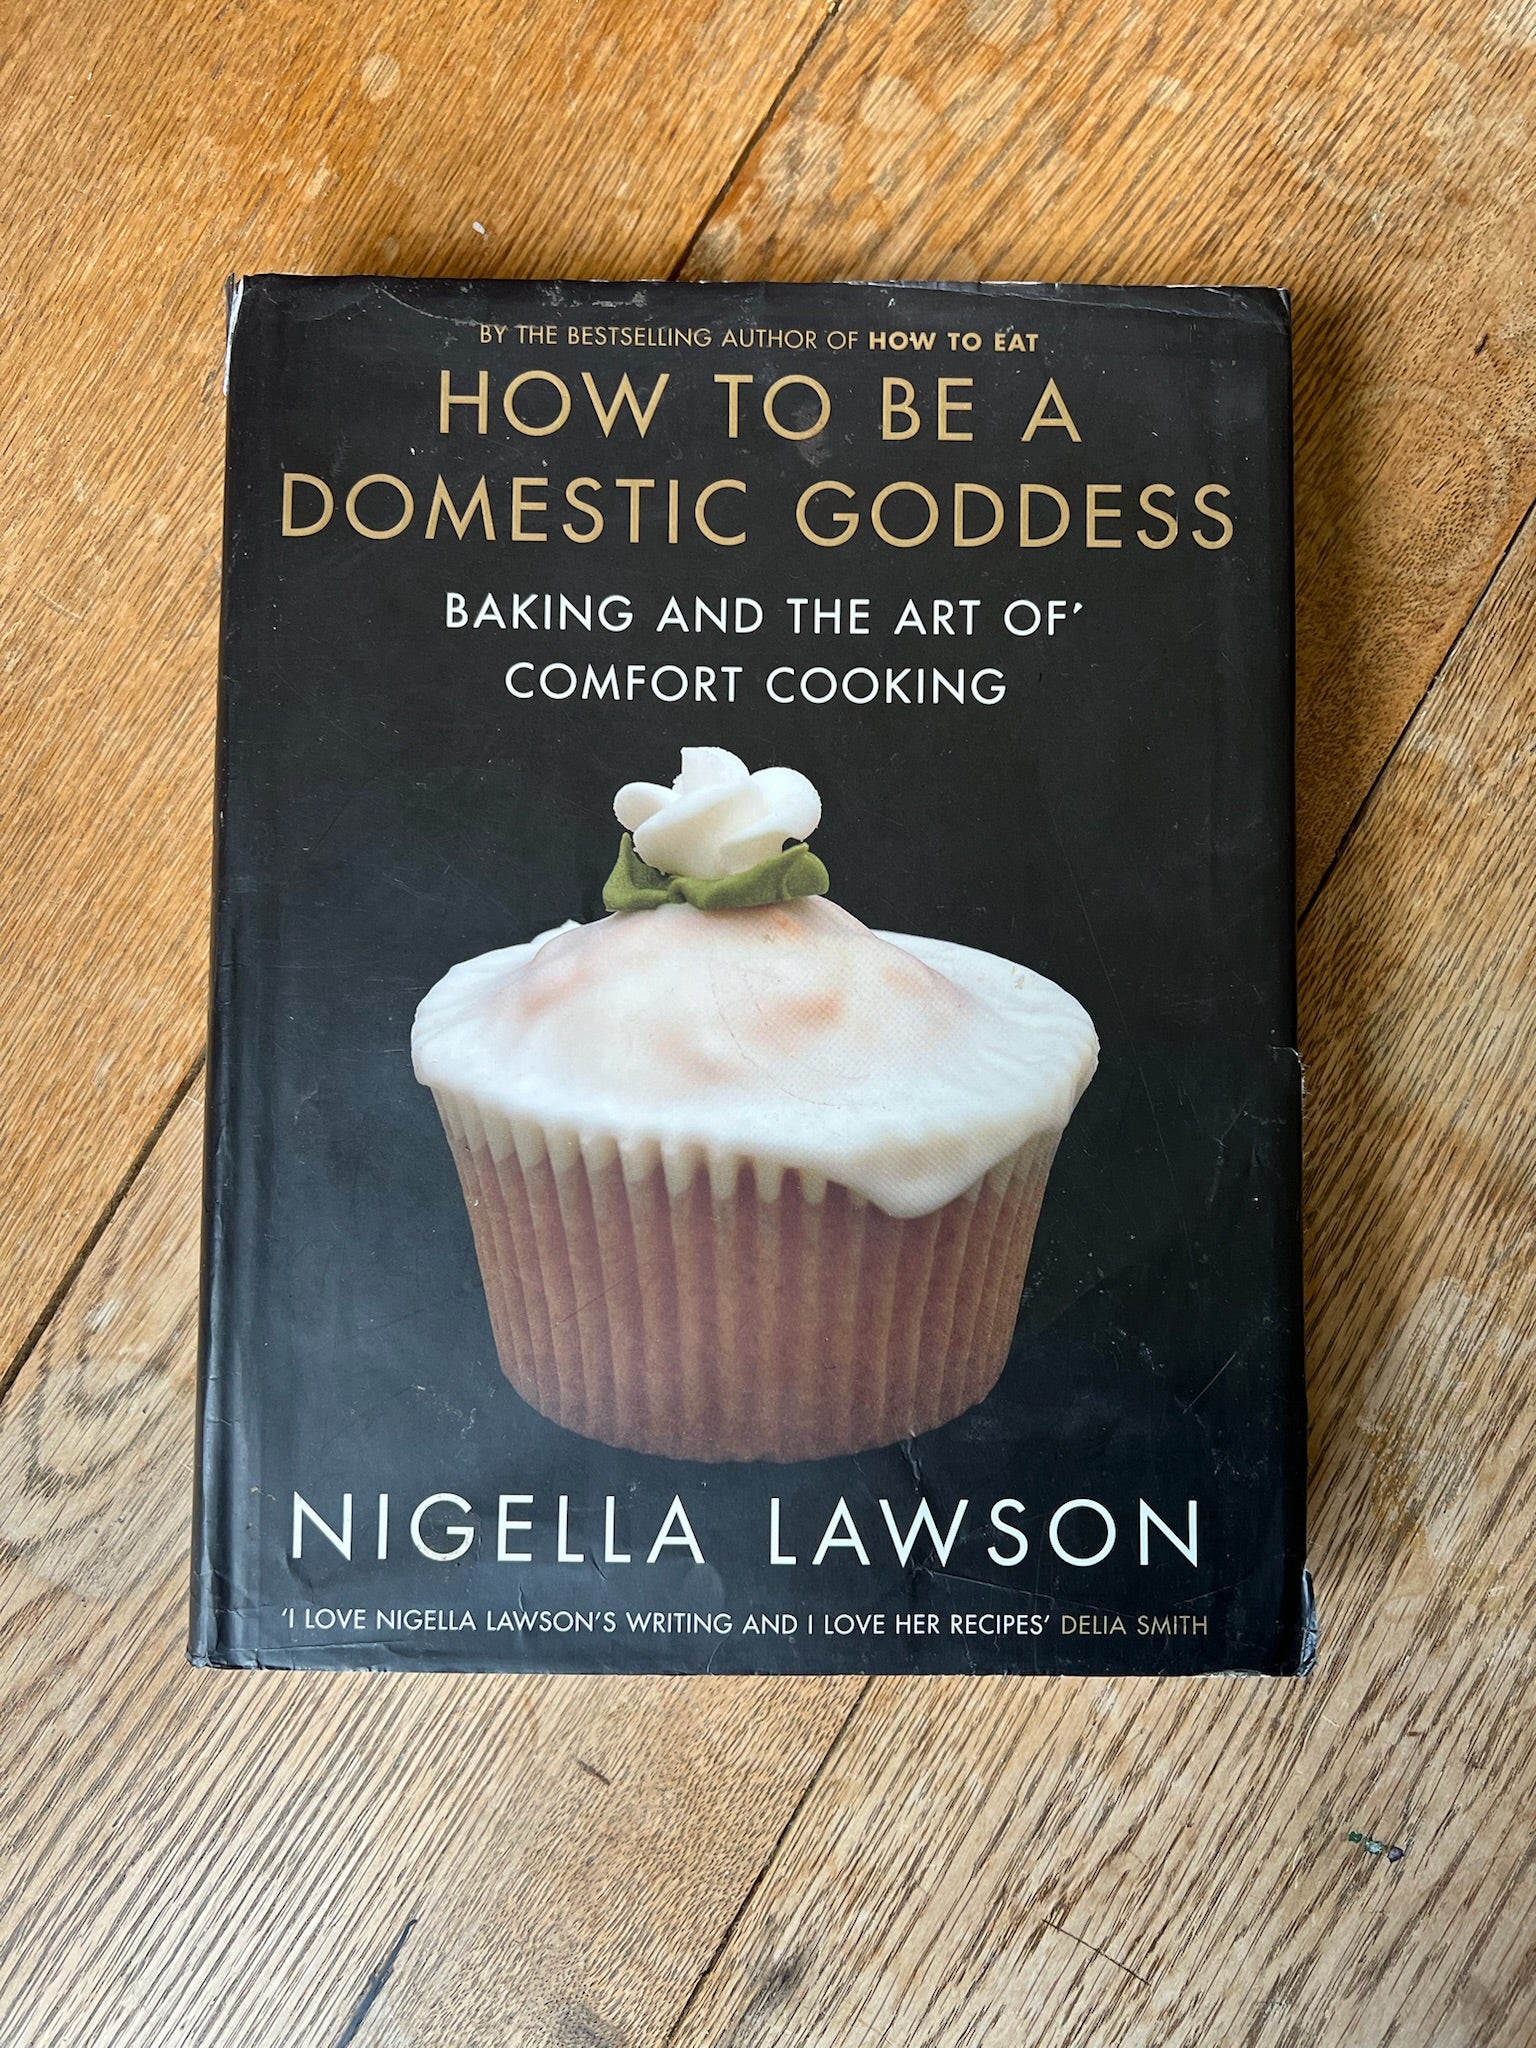 “HOW TO BE A DOMESTIC GODDESS” Nigella Lawson